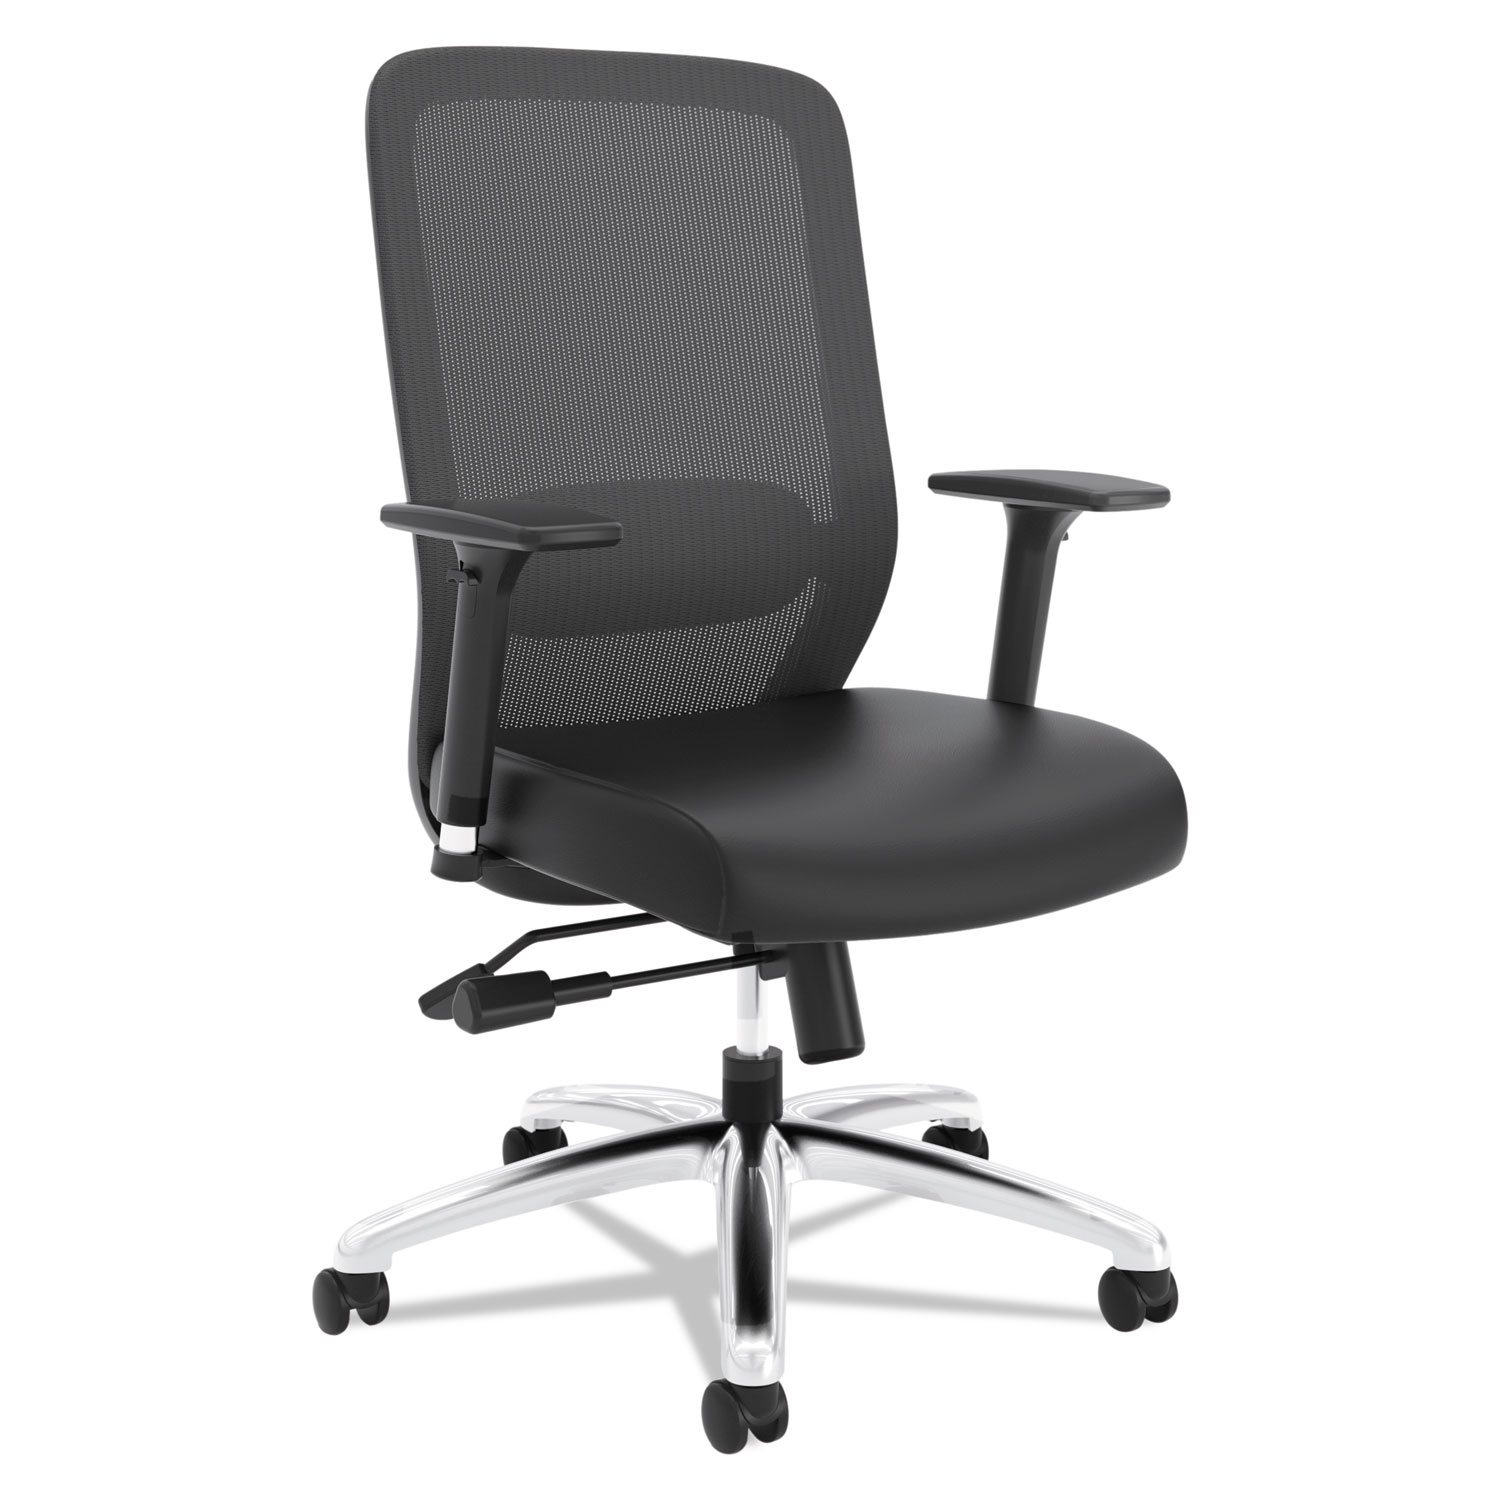  HON HVL721.SB11 Exposure Mesh High-Back Task Chair, Supports up to 250 lbs., Black Seat/Black Back, Black Base (BSXVL721SB11) 